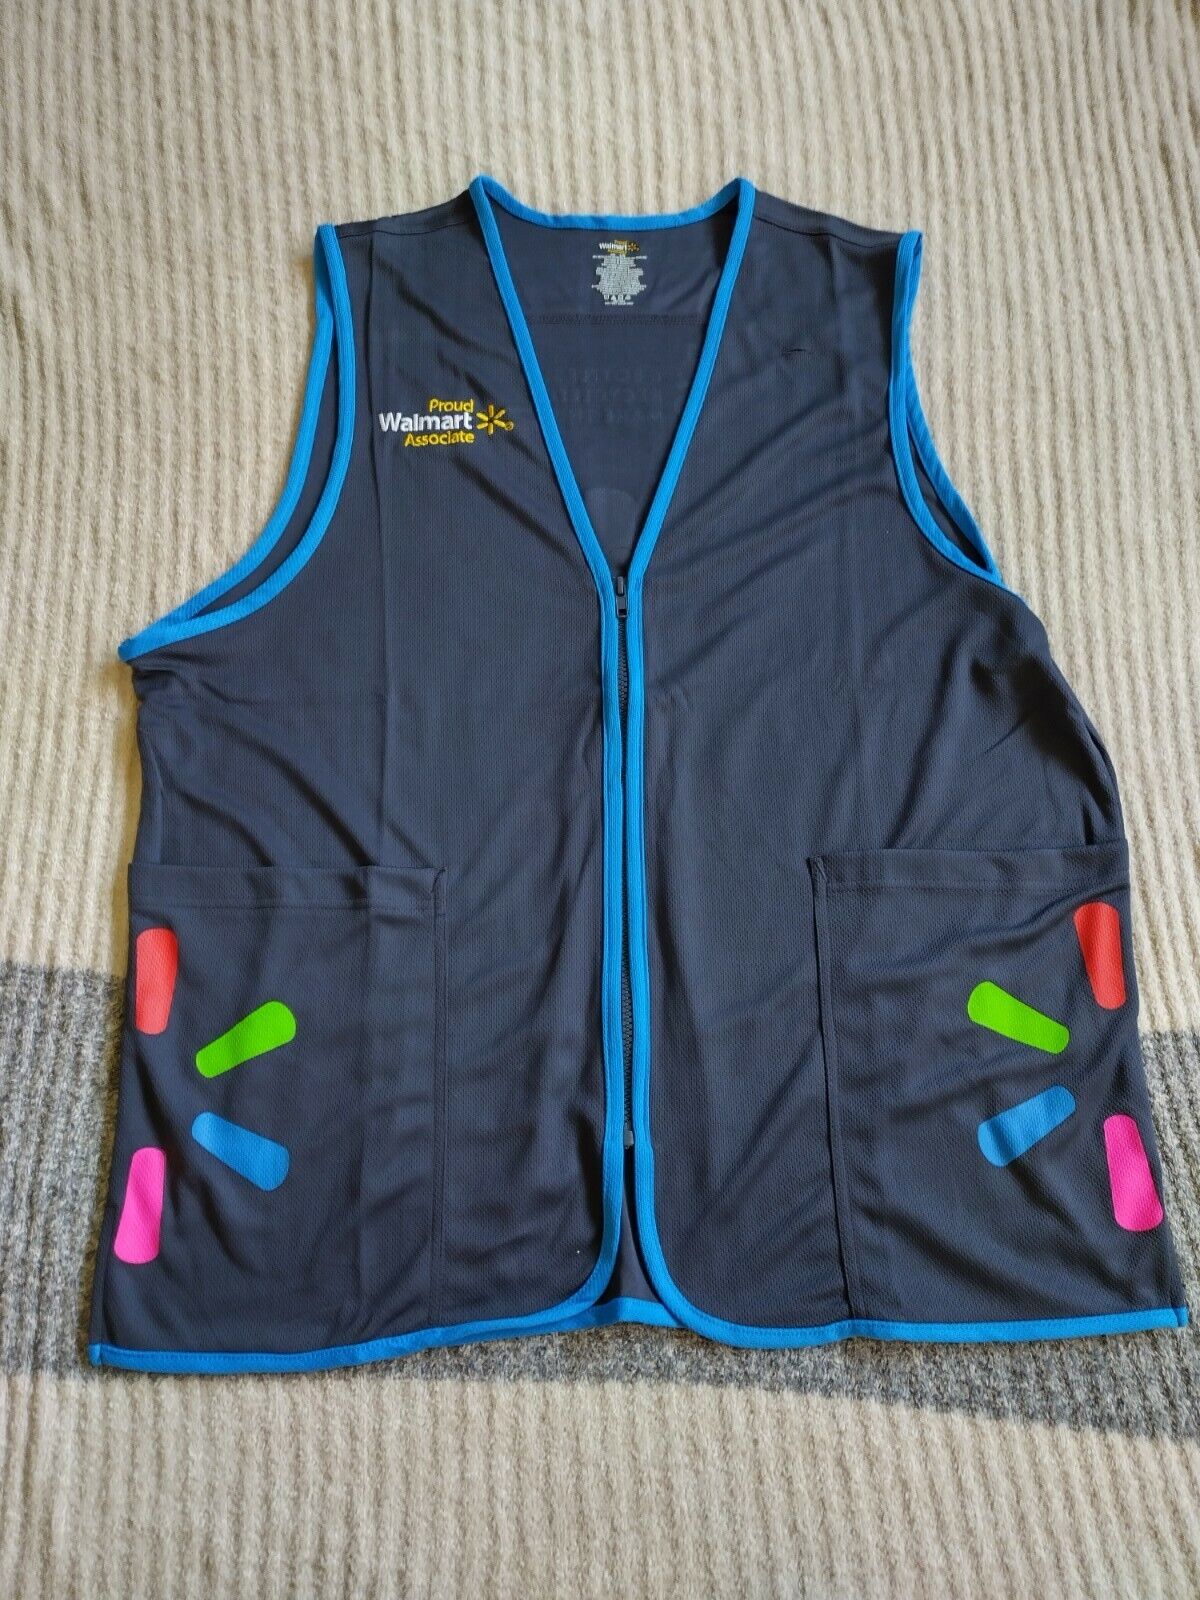 Walmart Associate / Employee Vest Size Large - Spark Design NWOT